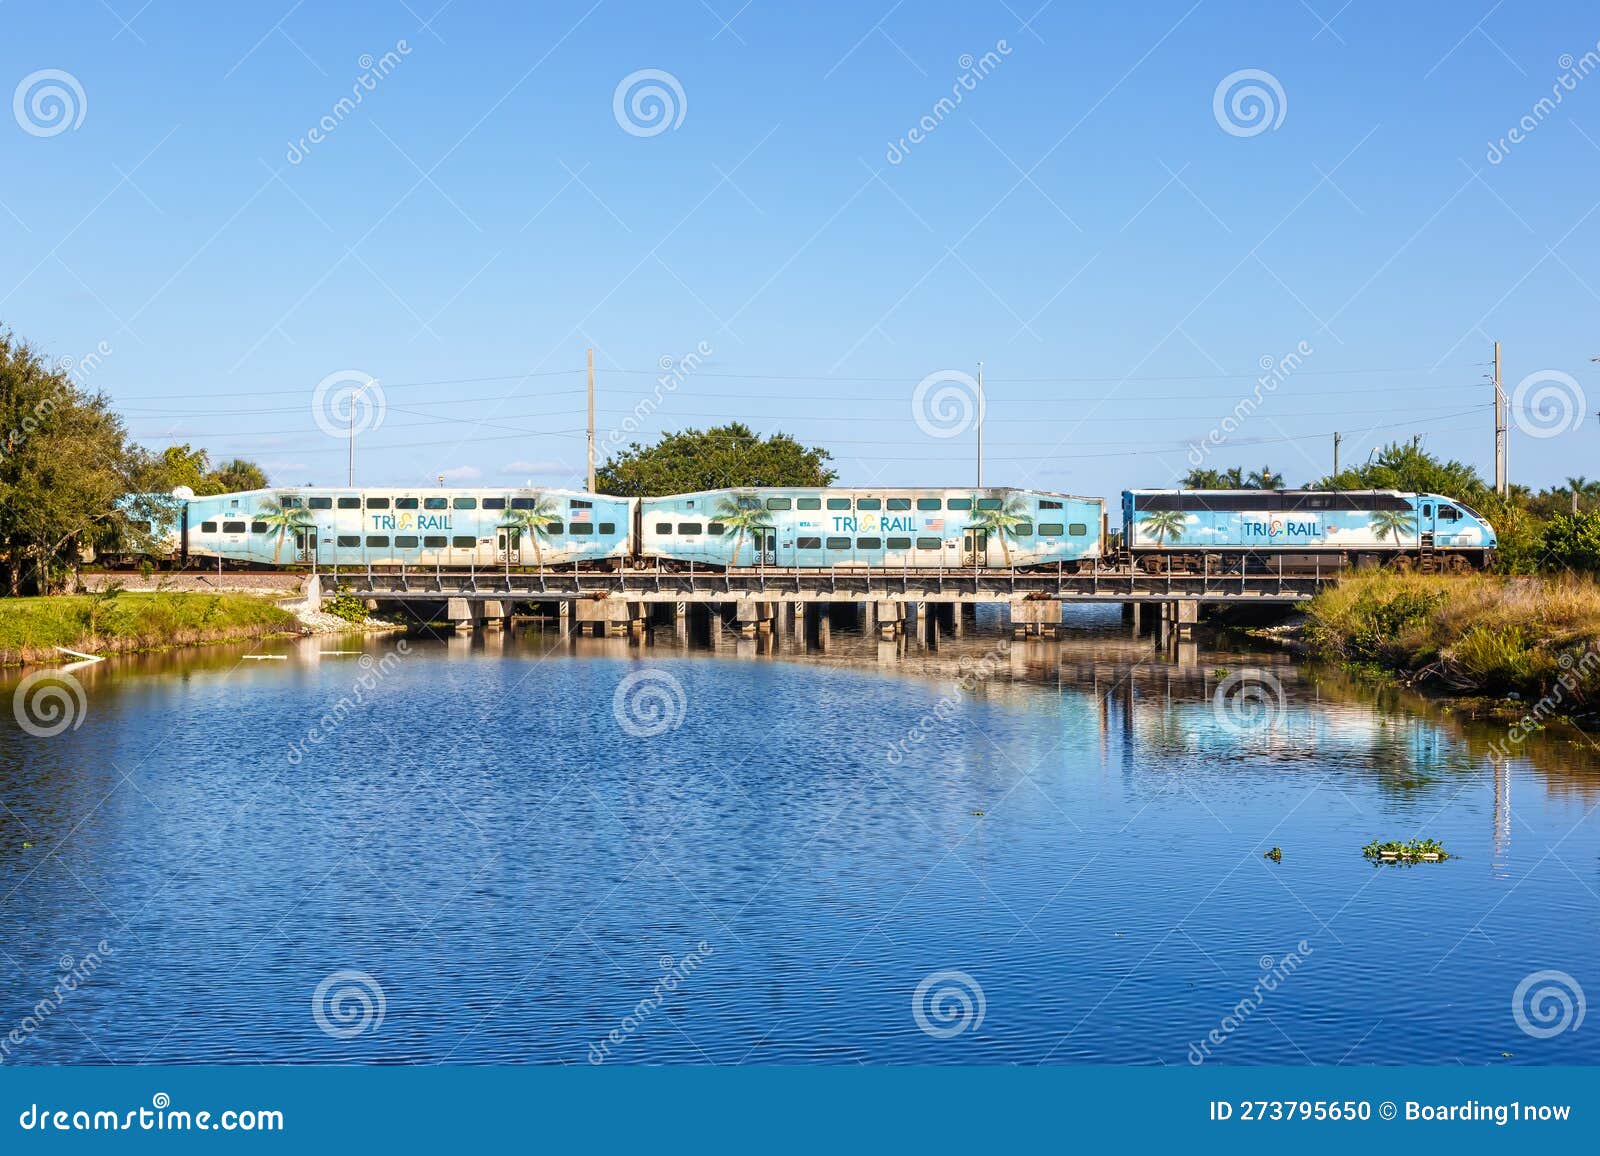 TriRail Commuter Rail Train in Delray Beach in Florida, United States